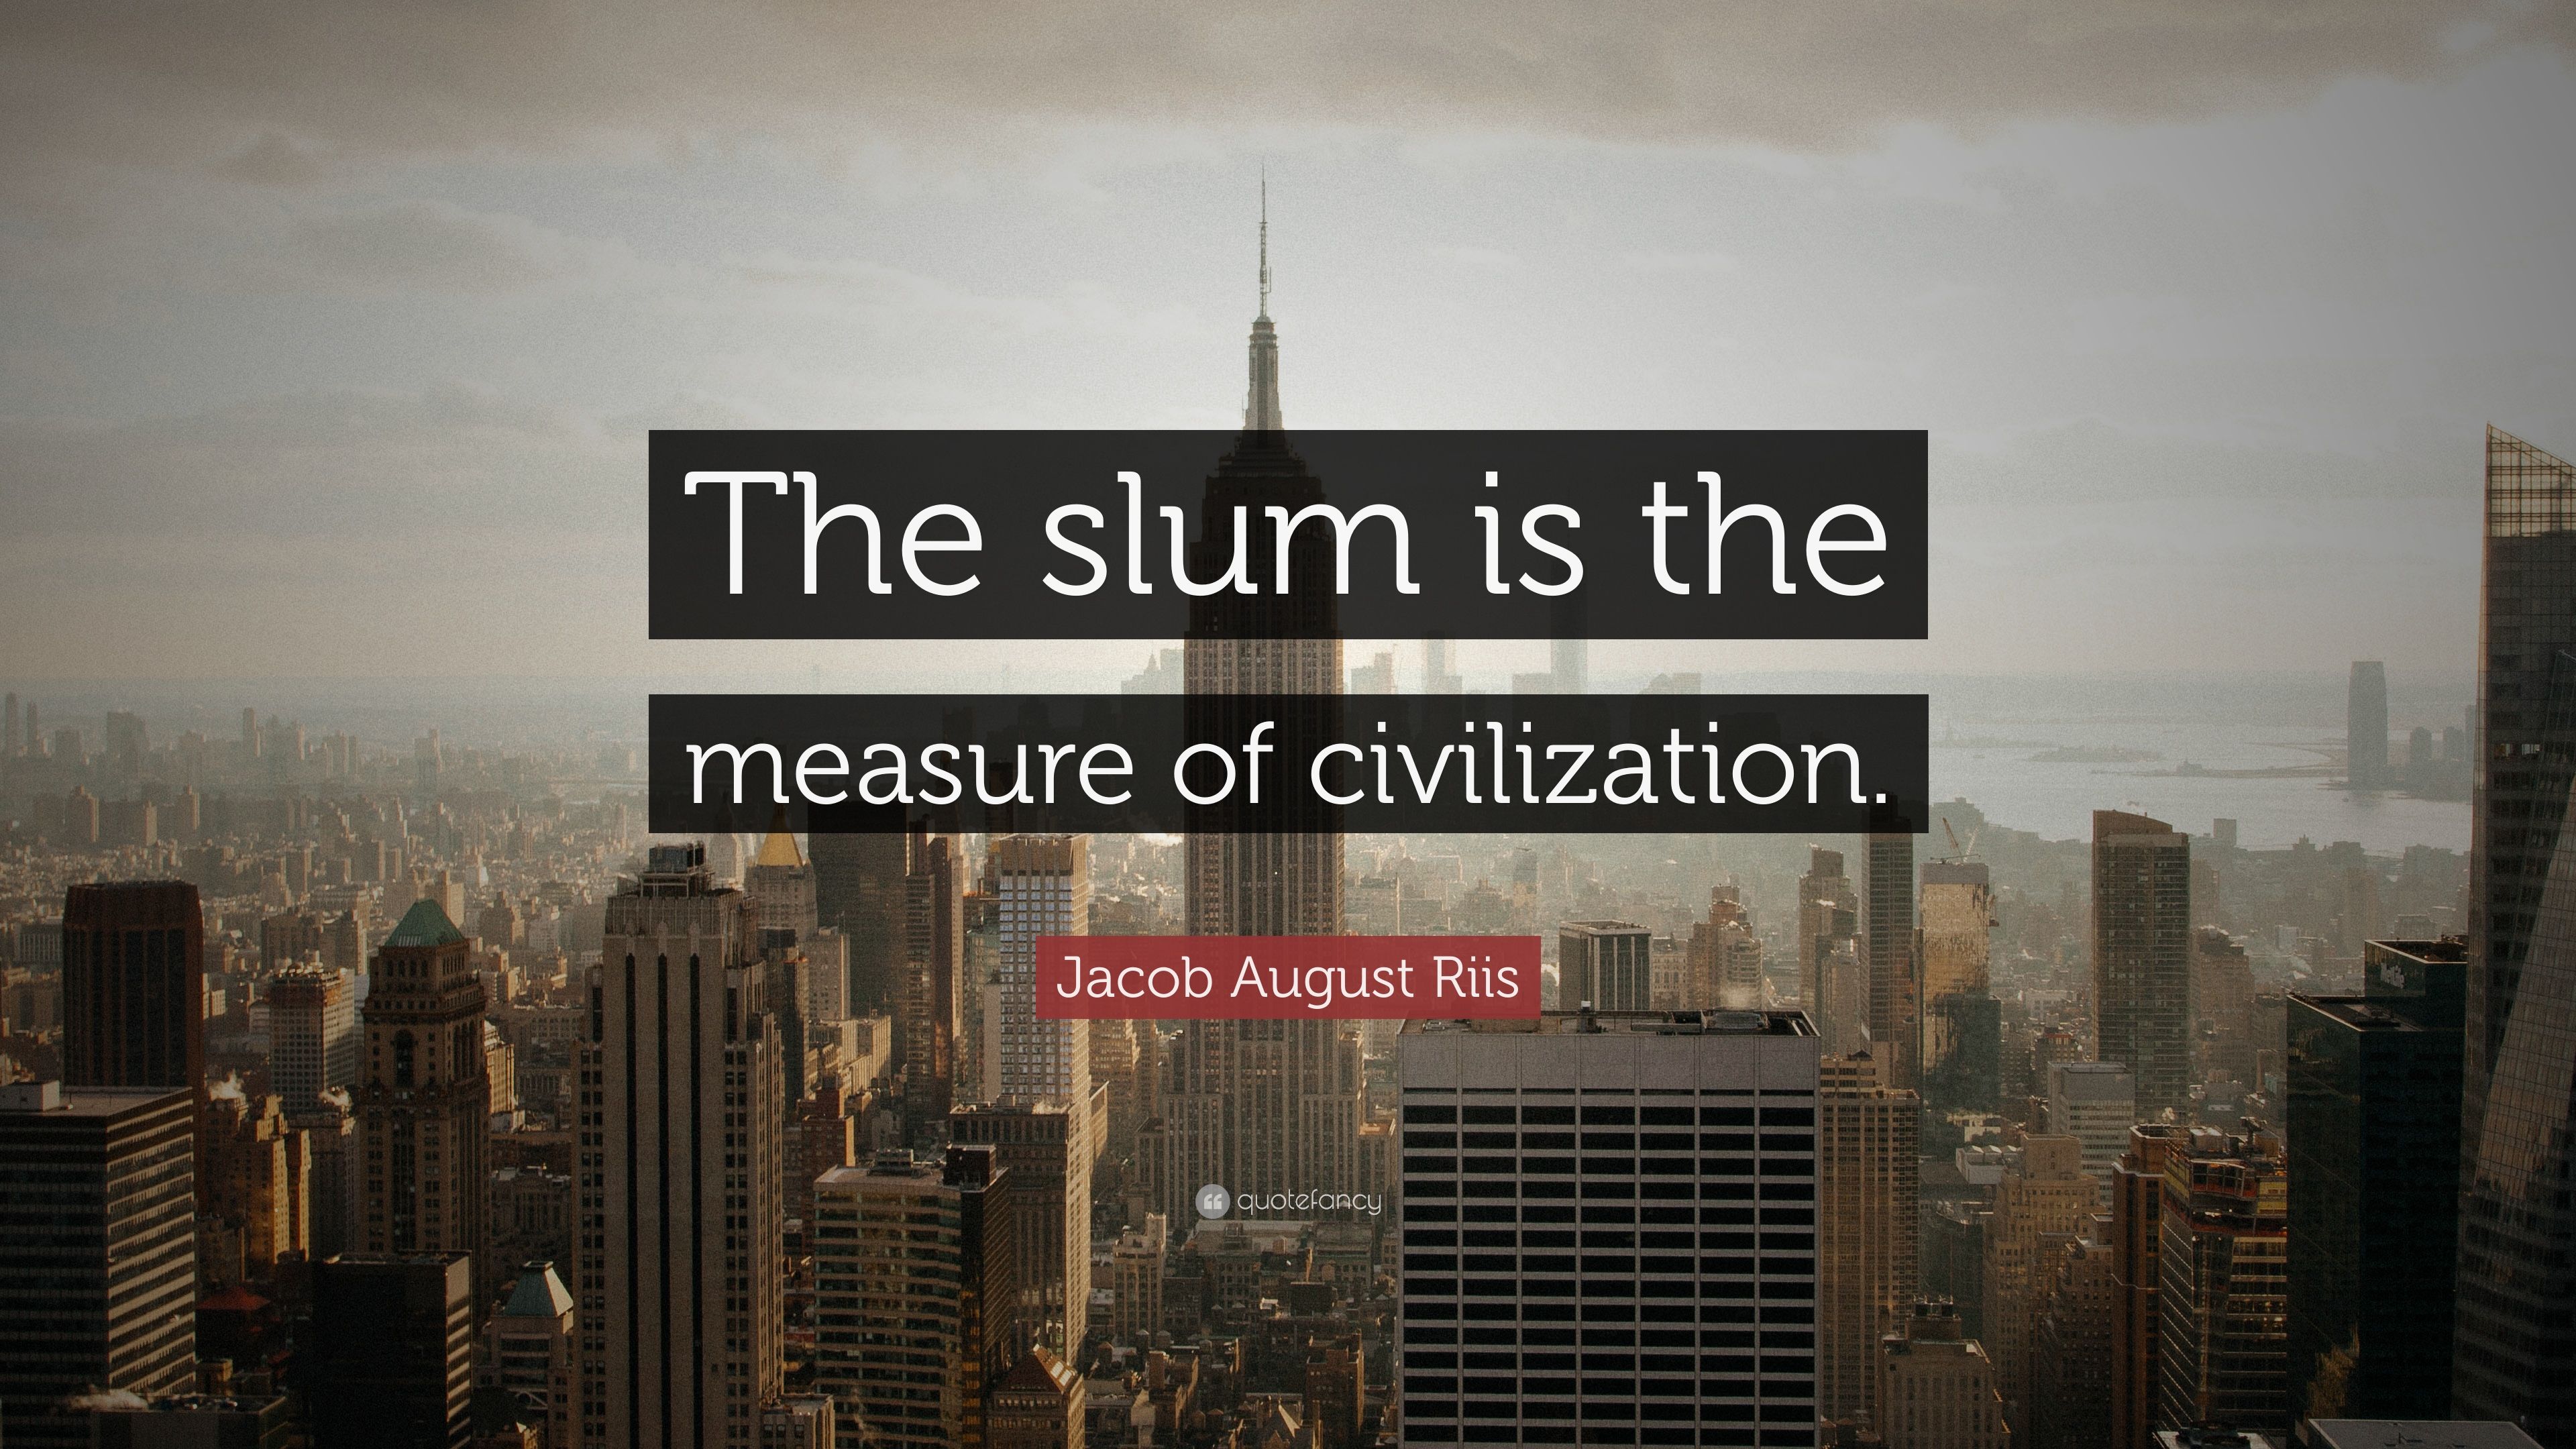 Jacob August Riis Quote: “The slum is the measure of civilization.” (7 wallpaper)